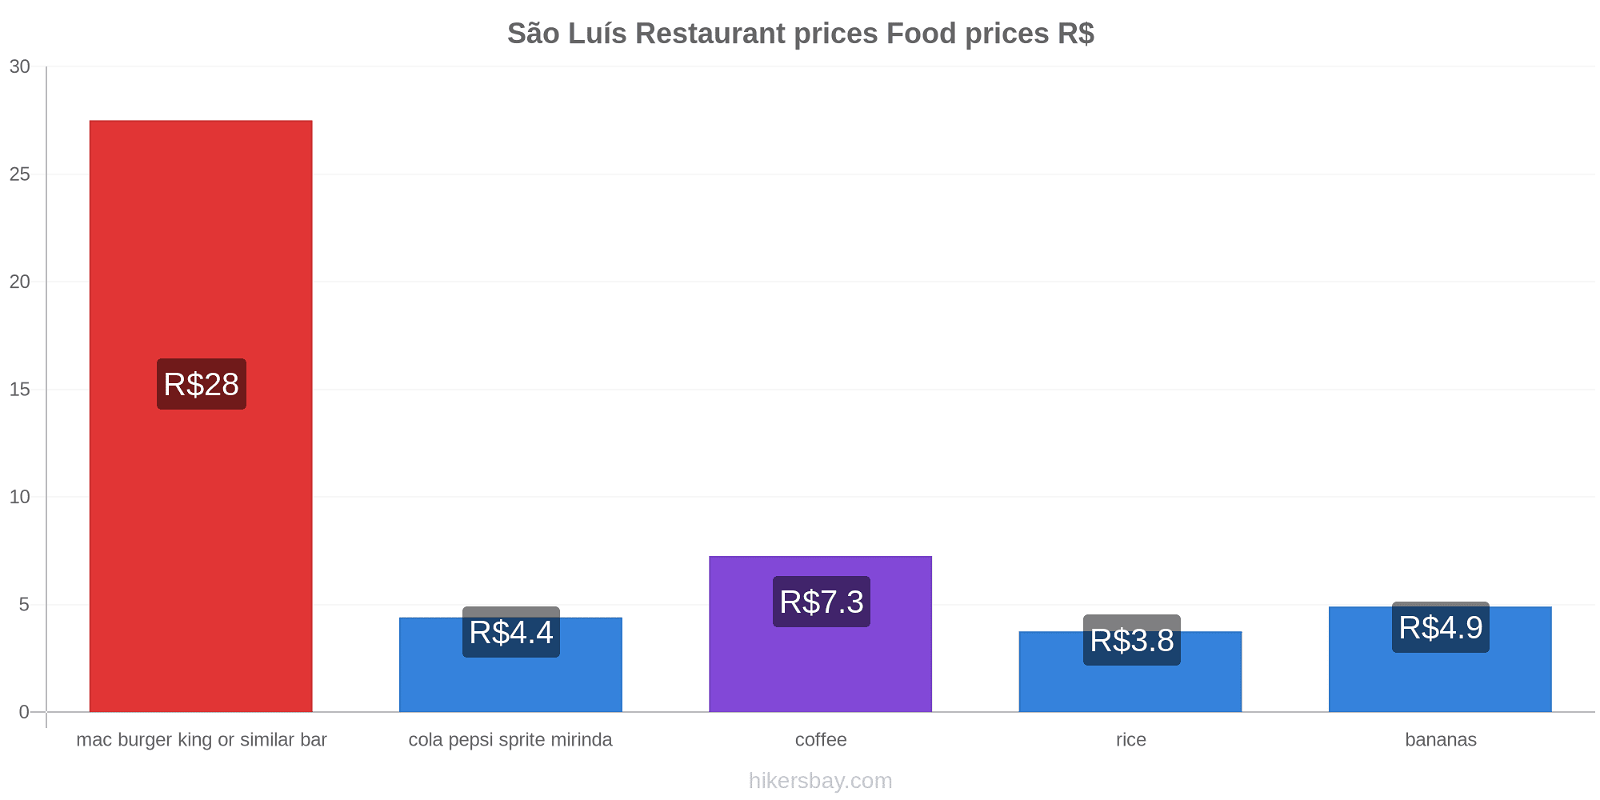 São Luís price changes hikersbay.com